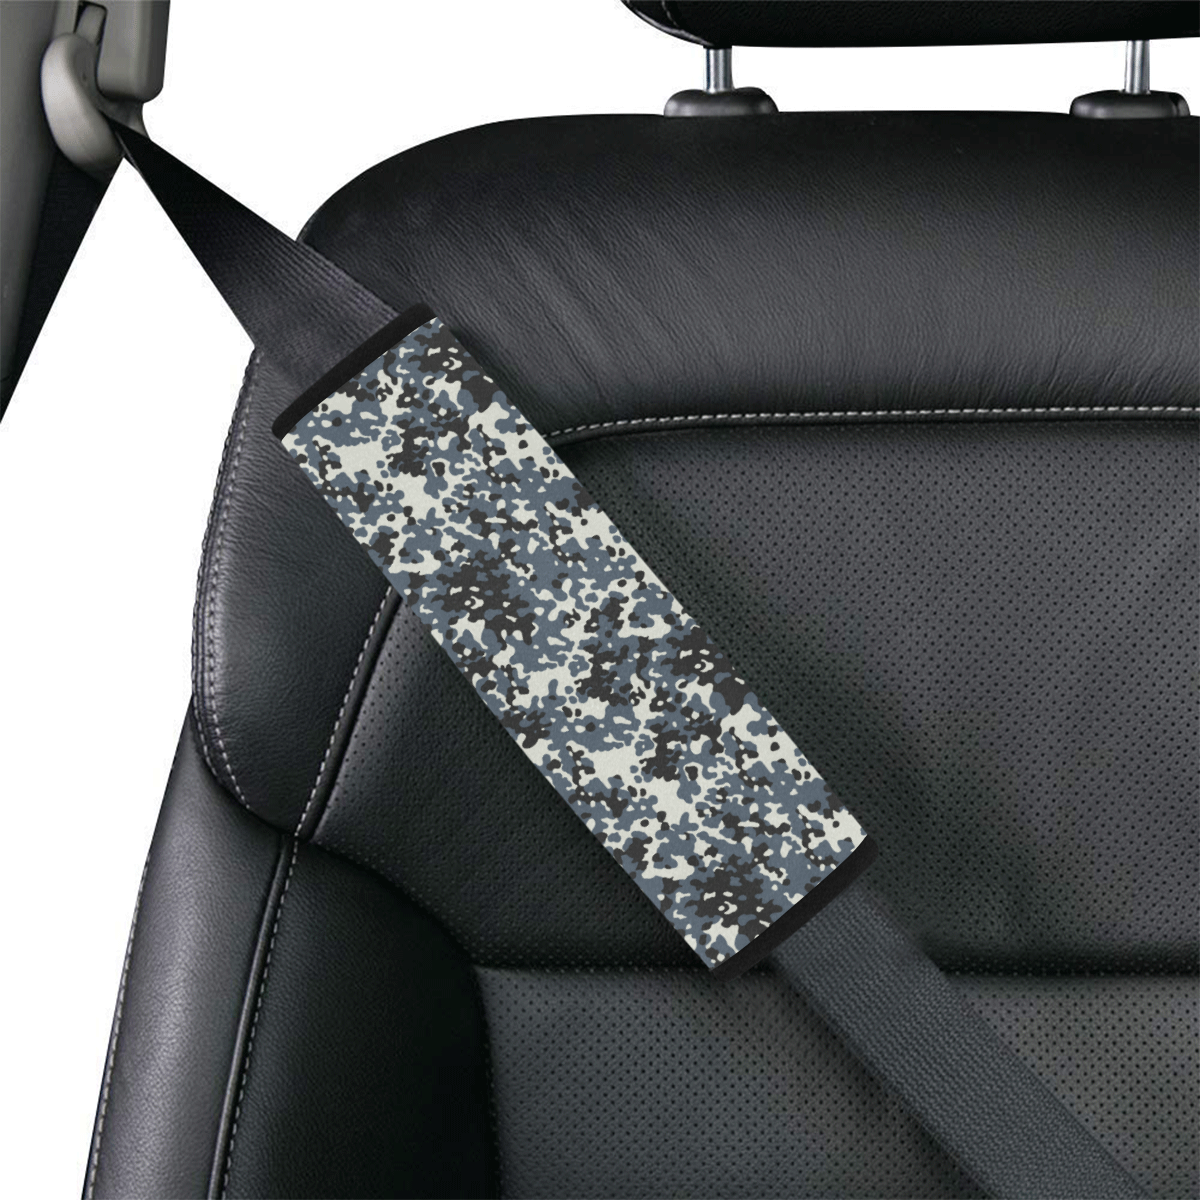 Urban City Black/Gray Digital Camouflage Car Seat Belt Cover 7''x8.5''